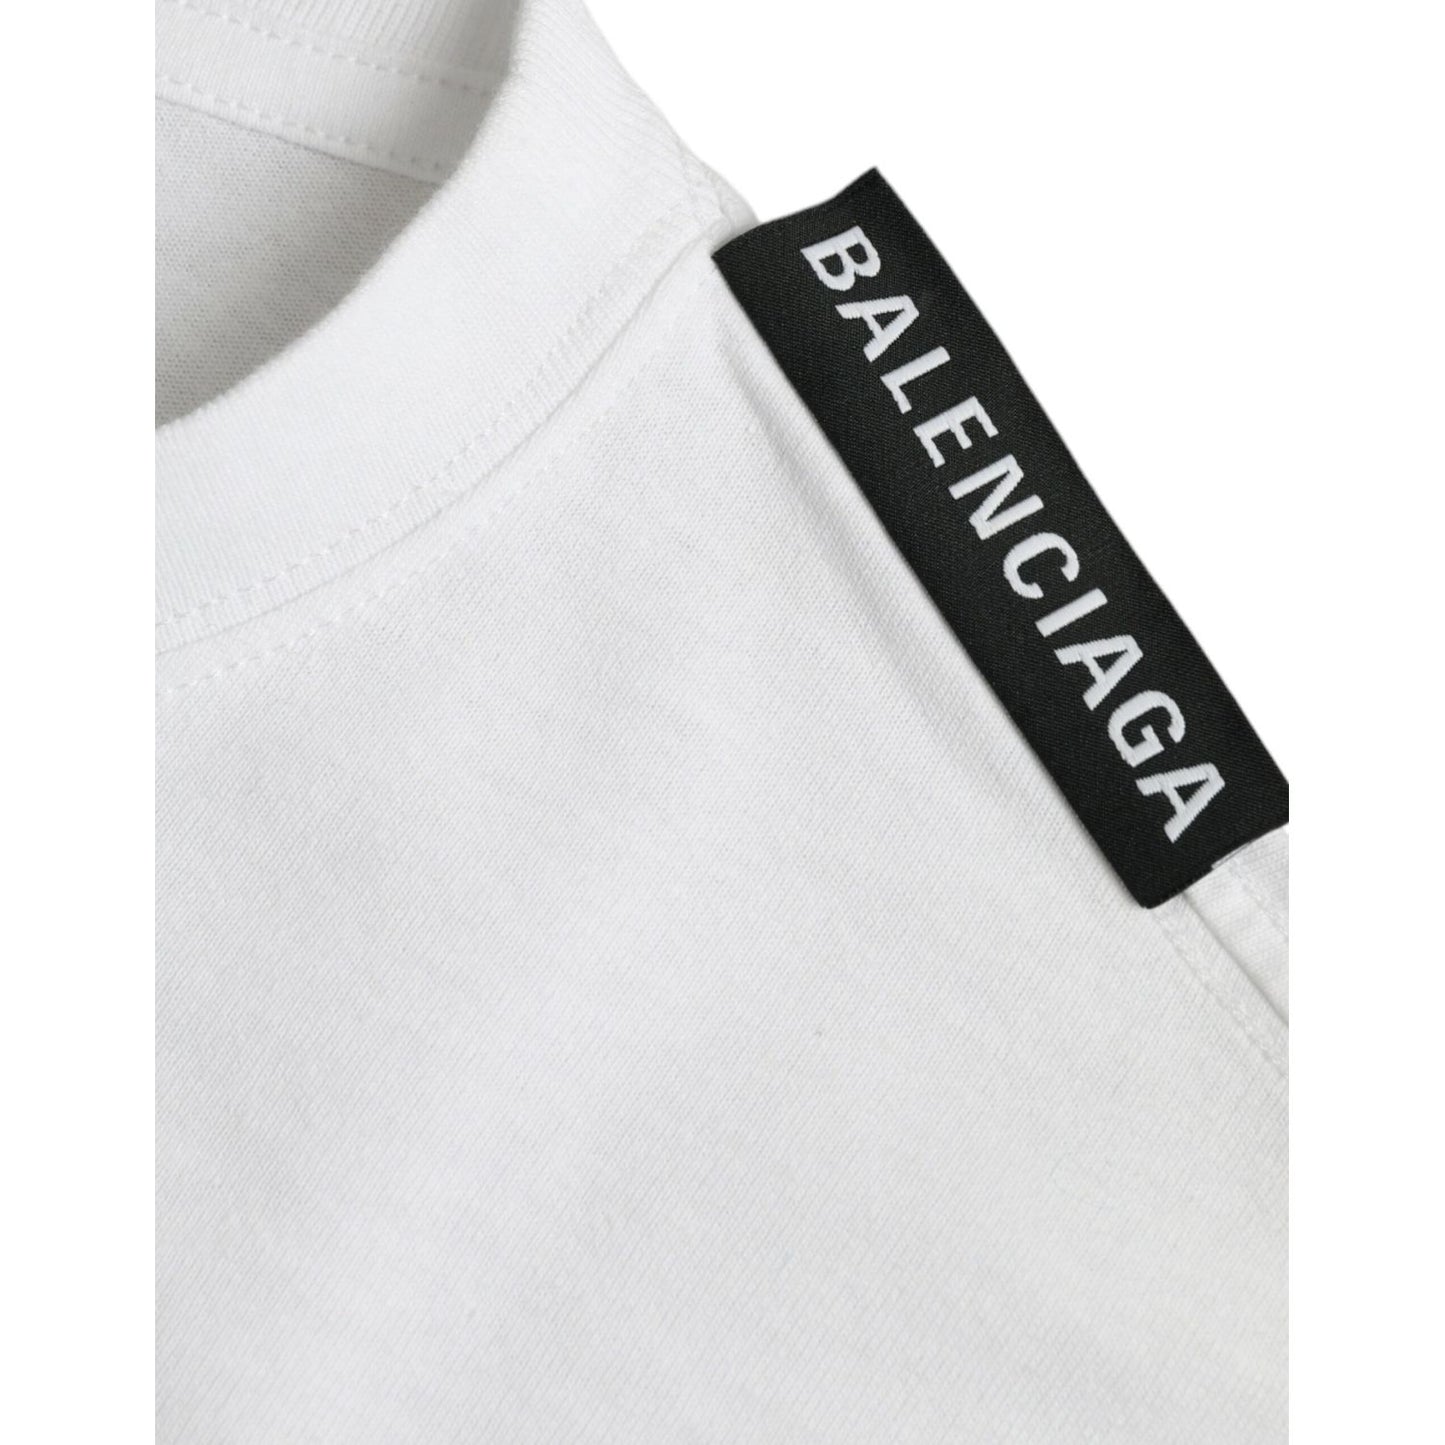 Balenciaga Off White Cotton Jersey Round Neck T-shirt off-white-cotton-jersey-round-neck-t-shirt